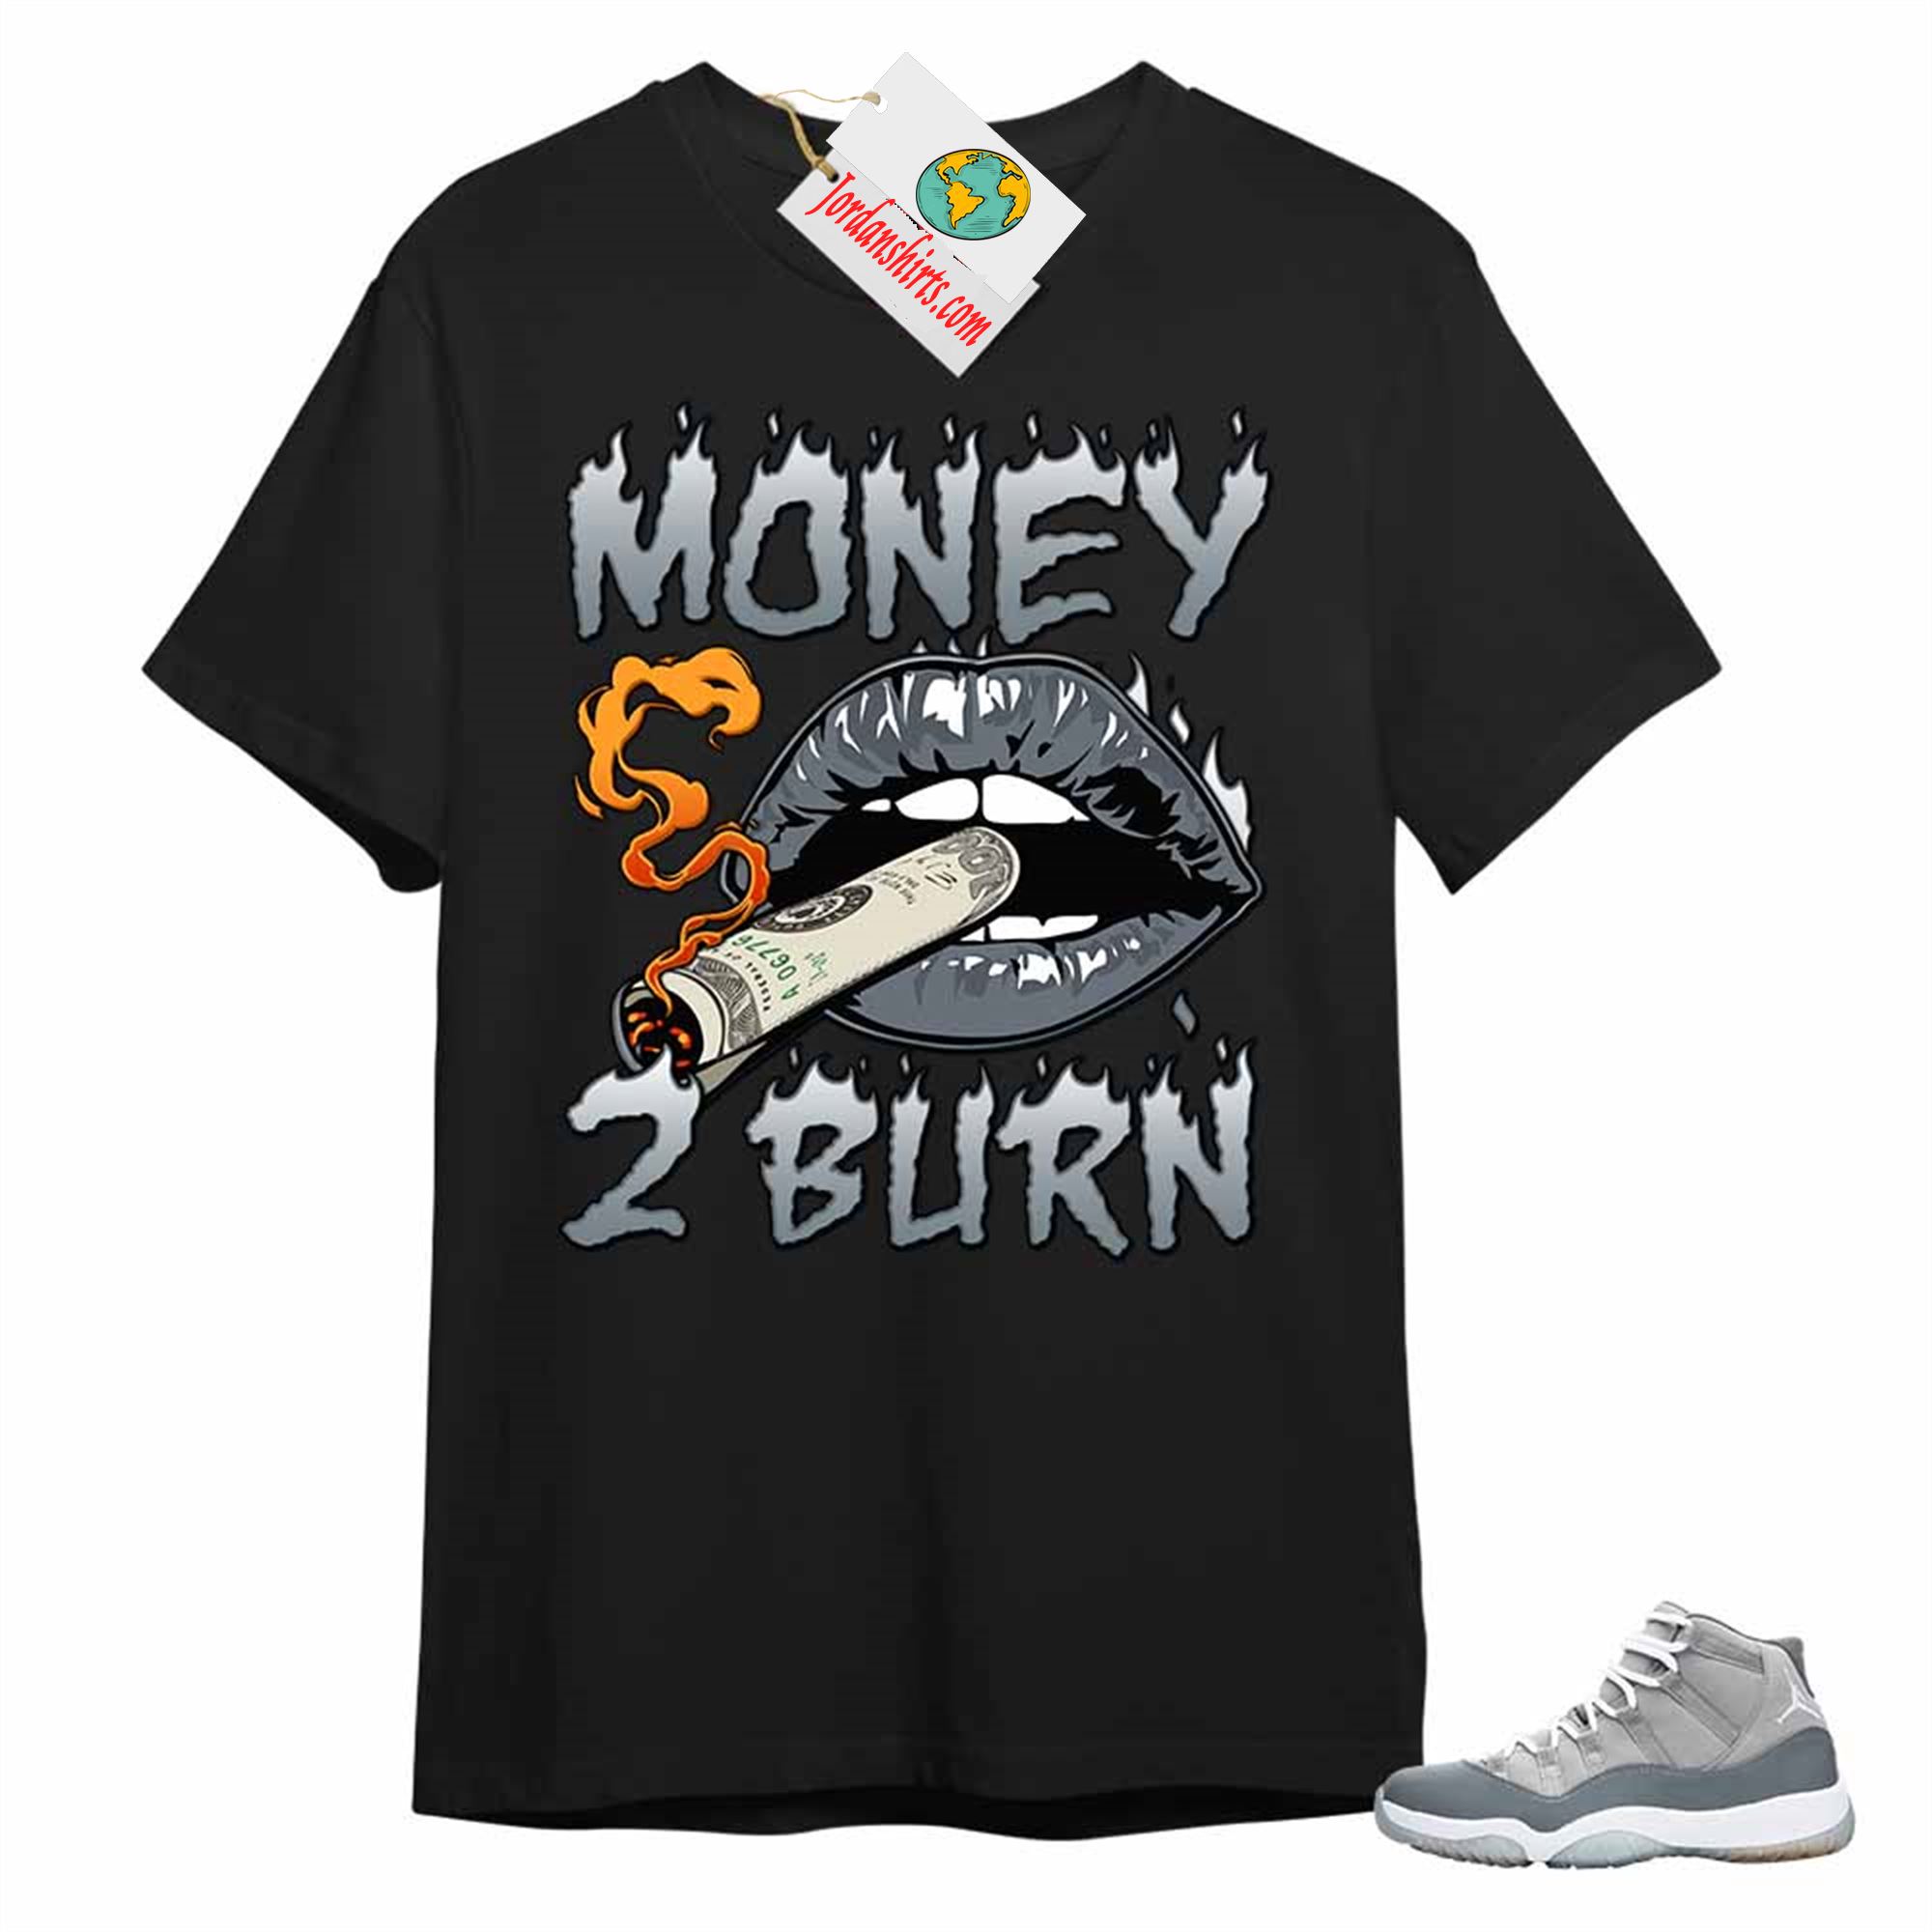 Jordan 11 Shirt, Money To Burn Black T-shirt Air Jordan 11 Cool Grey 11s Full Size Up To 5xl